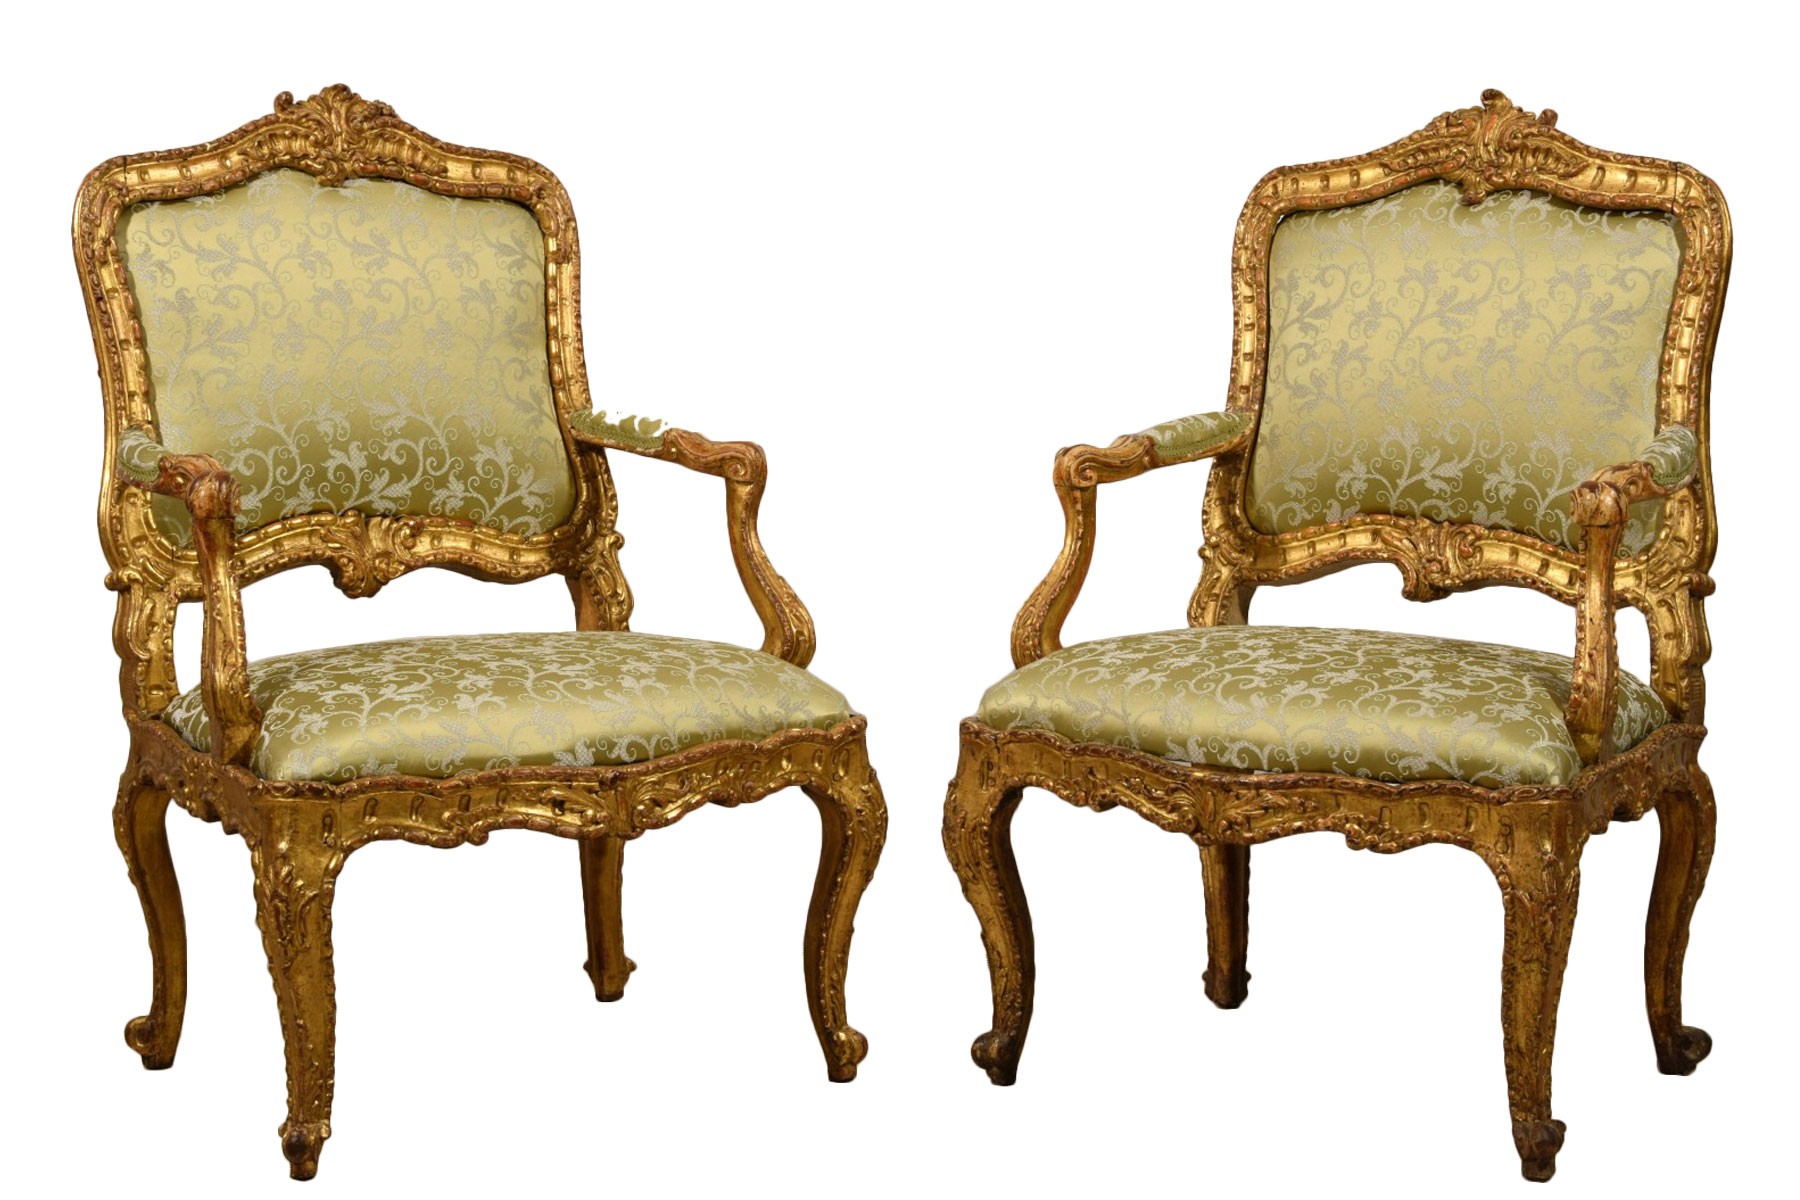 Antique Louis XV style gilt wood armchair